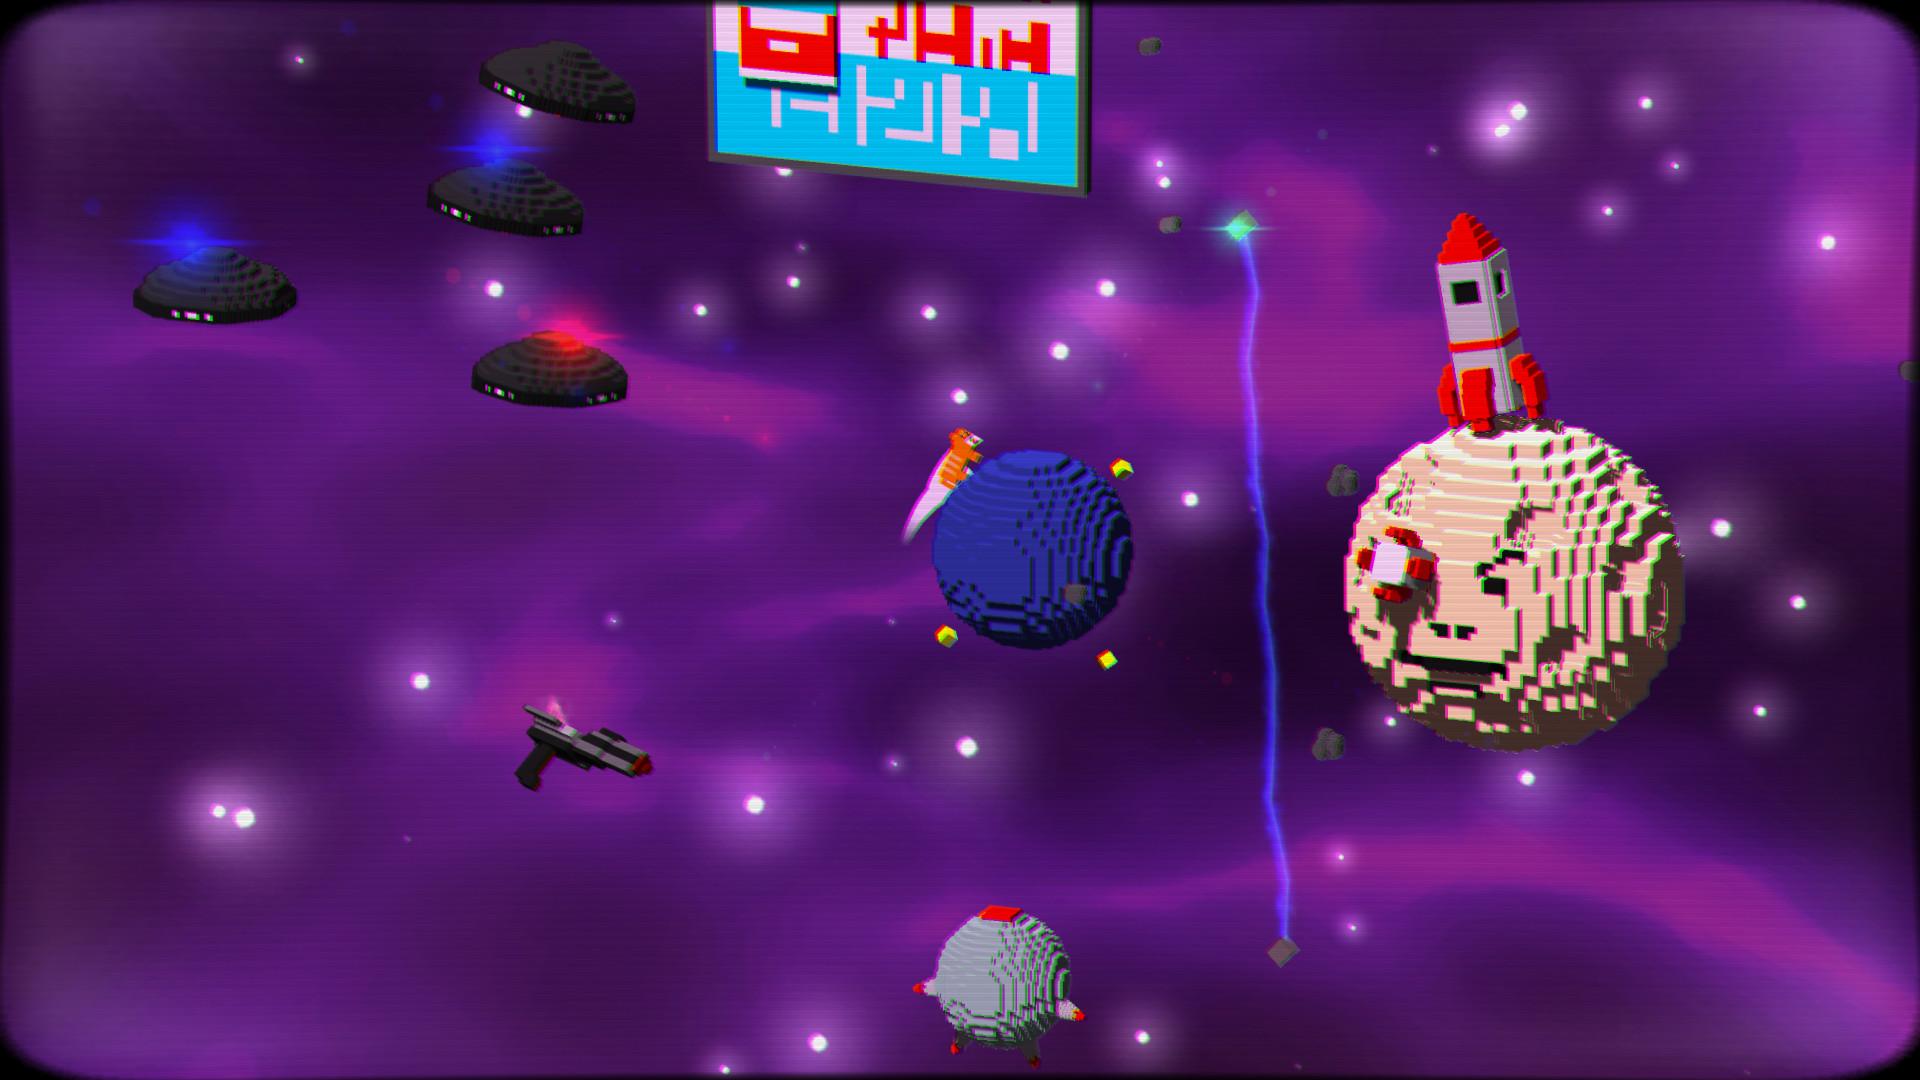 Screenshot №6 from game Cosmic Leap